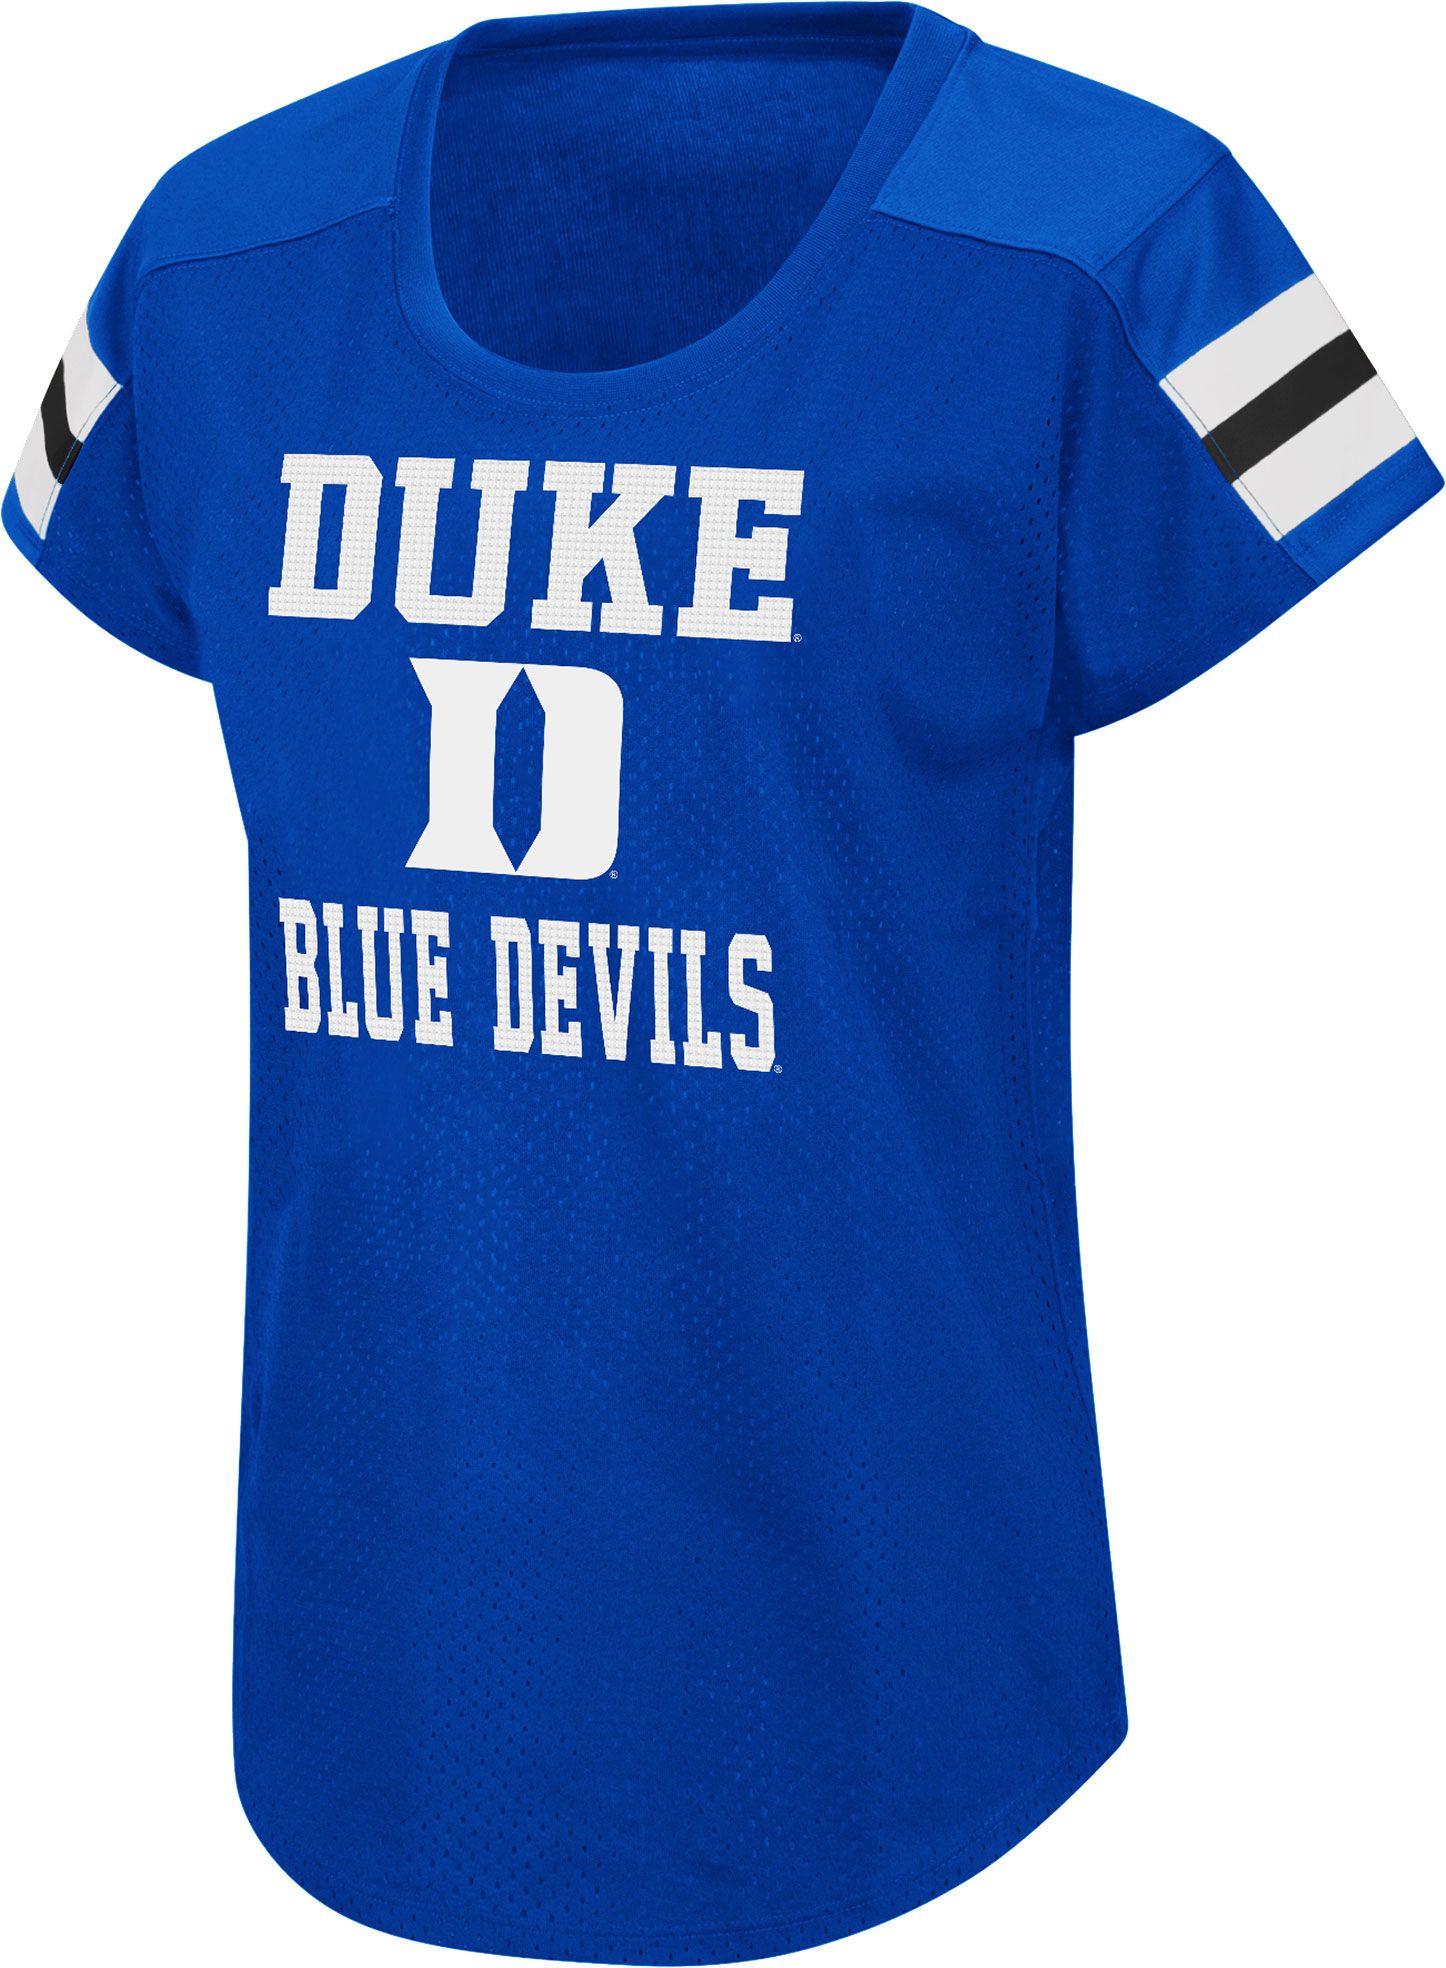 duke blue devils womens shirt